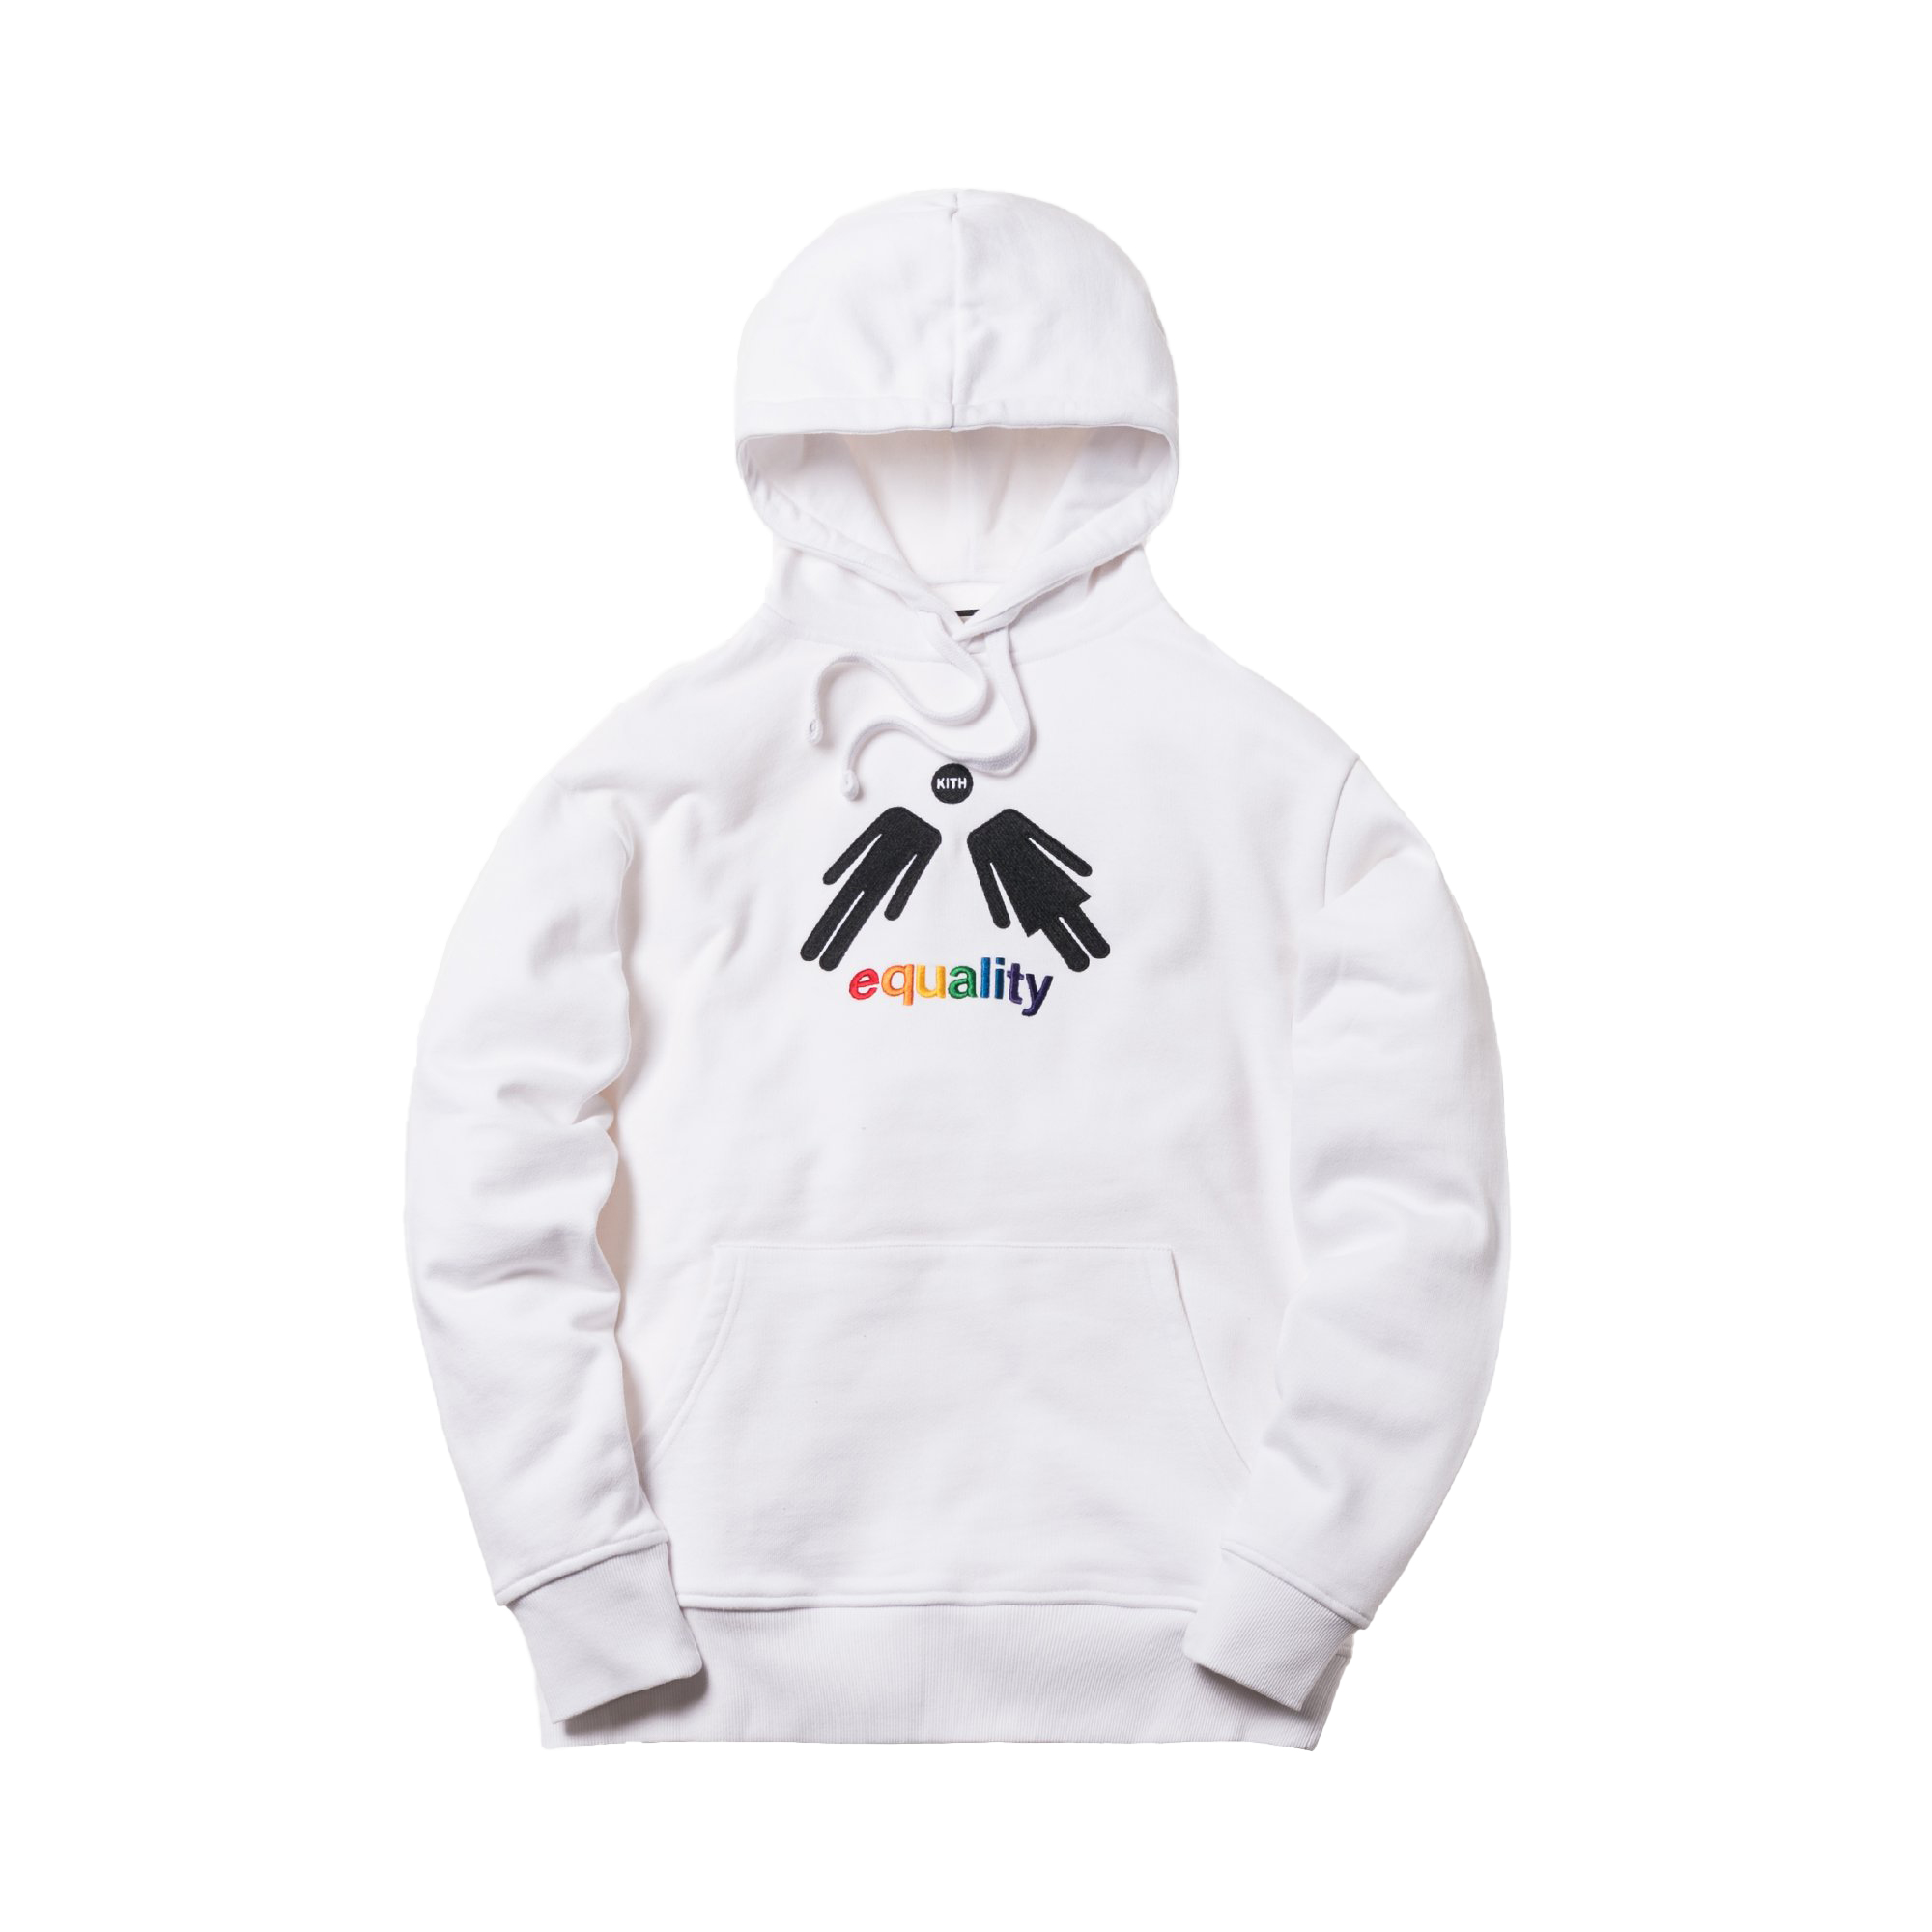 Kith equality hoodie - sorbillomenu.com